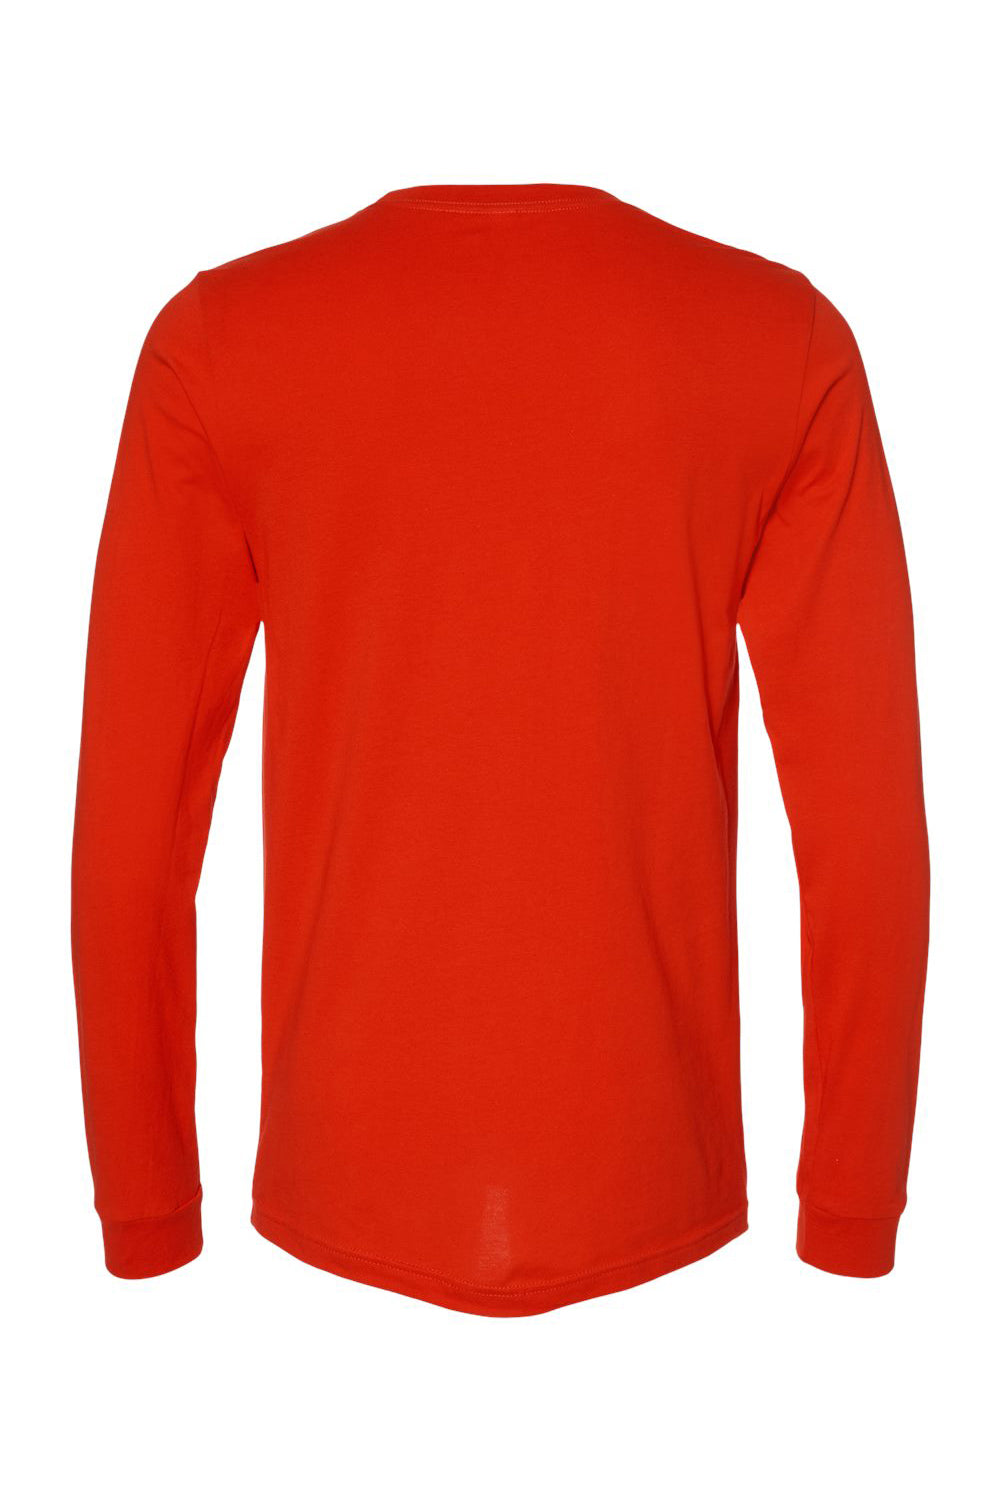 Bella + Canvas BC3501/3501 Mens Jersey Long Sleeve Crewneck T-Shirt Poppy Red Flat Back